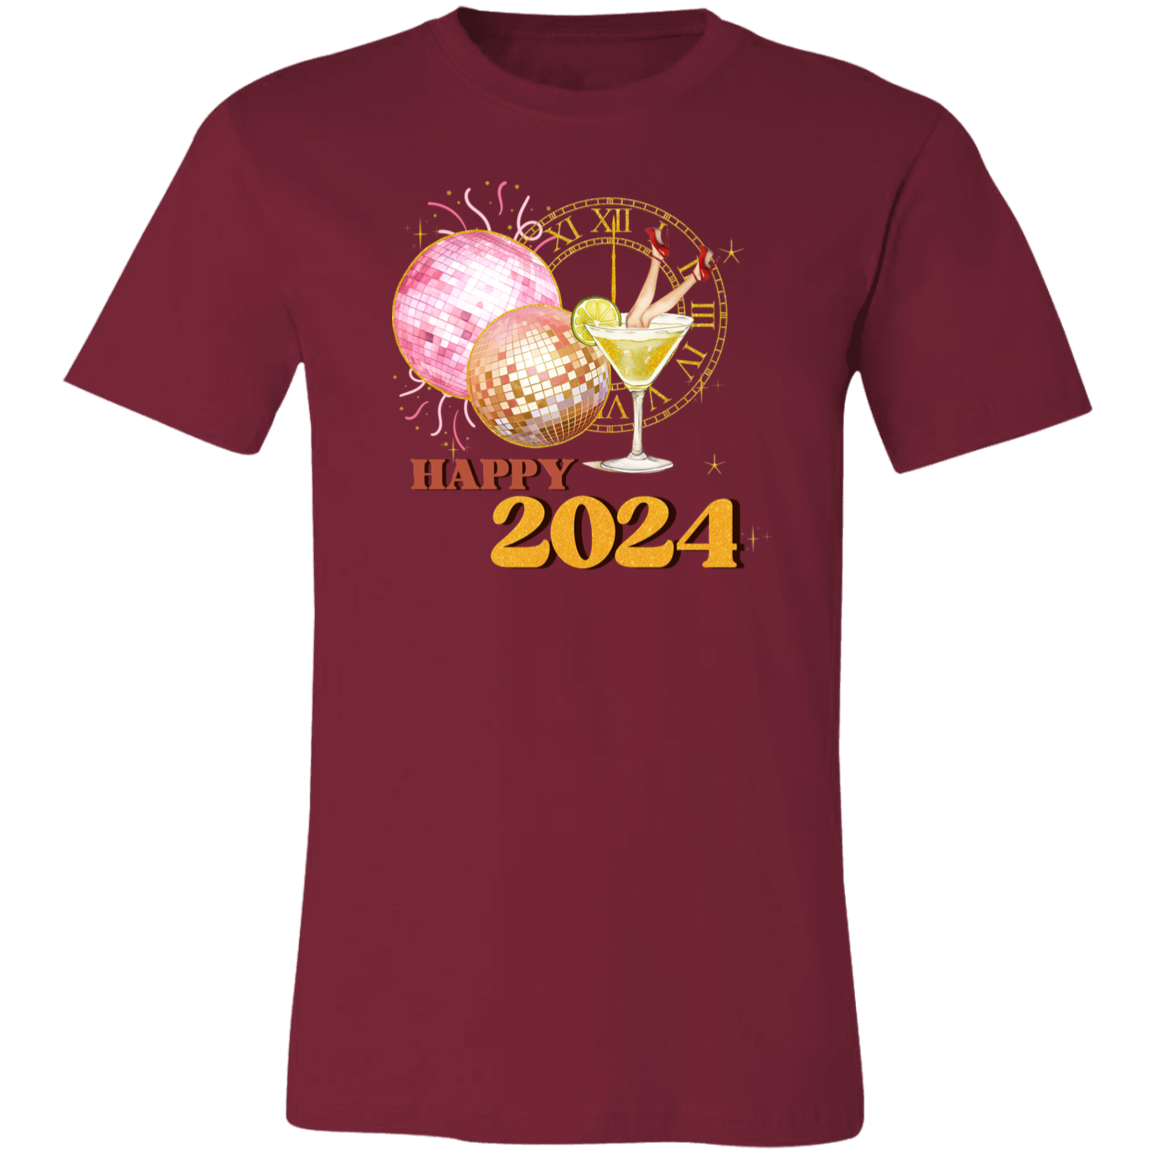 Happy 2024 Shirt